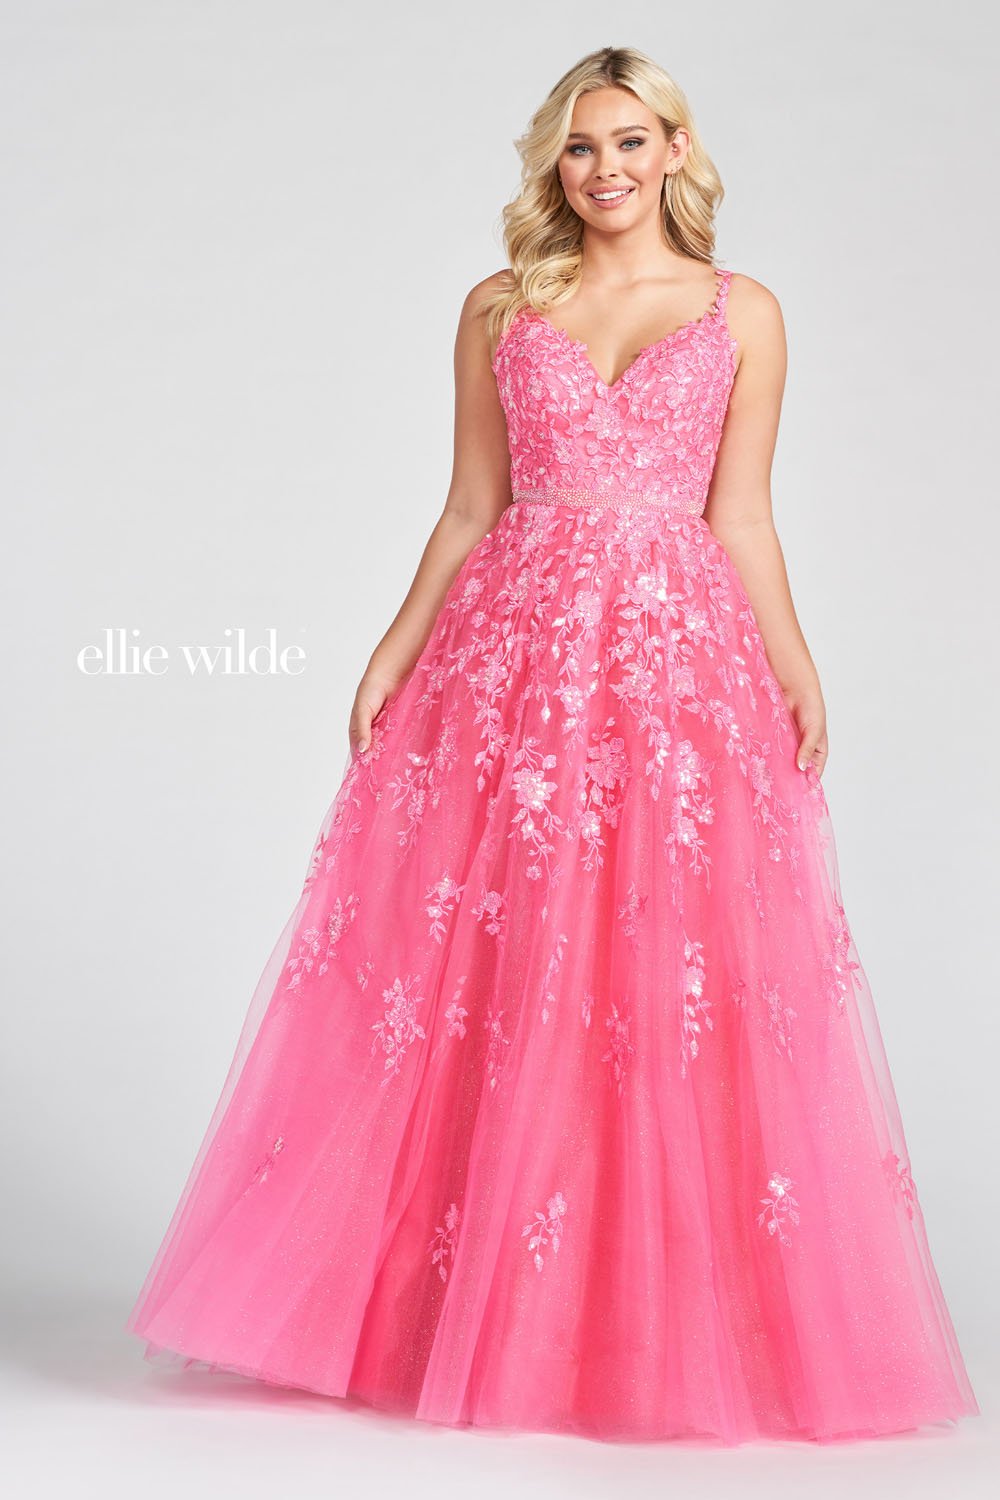 Ellie Wilde Hot Pink EW122084 Prom Dress Image.  Hot Pink formal dress.